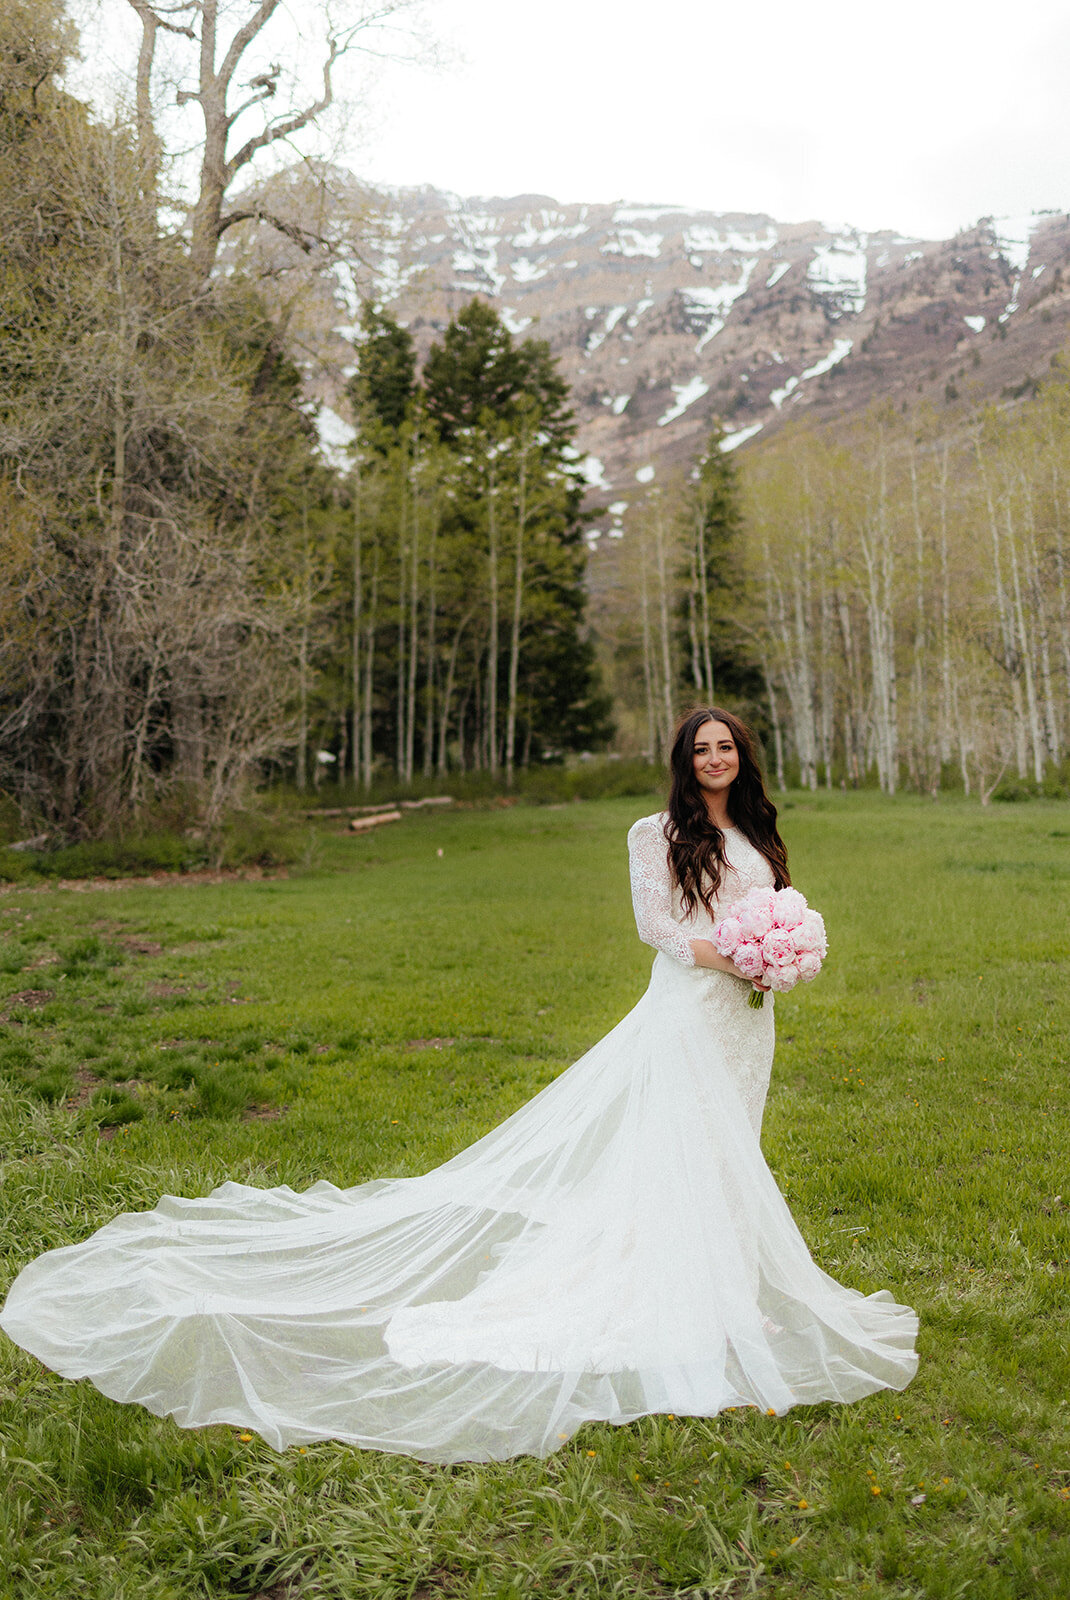 Lace wedding dress with long train bridal photos at Aspen Grove in Utah.